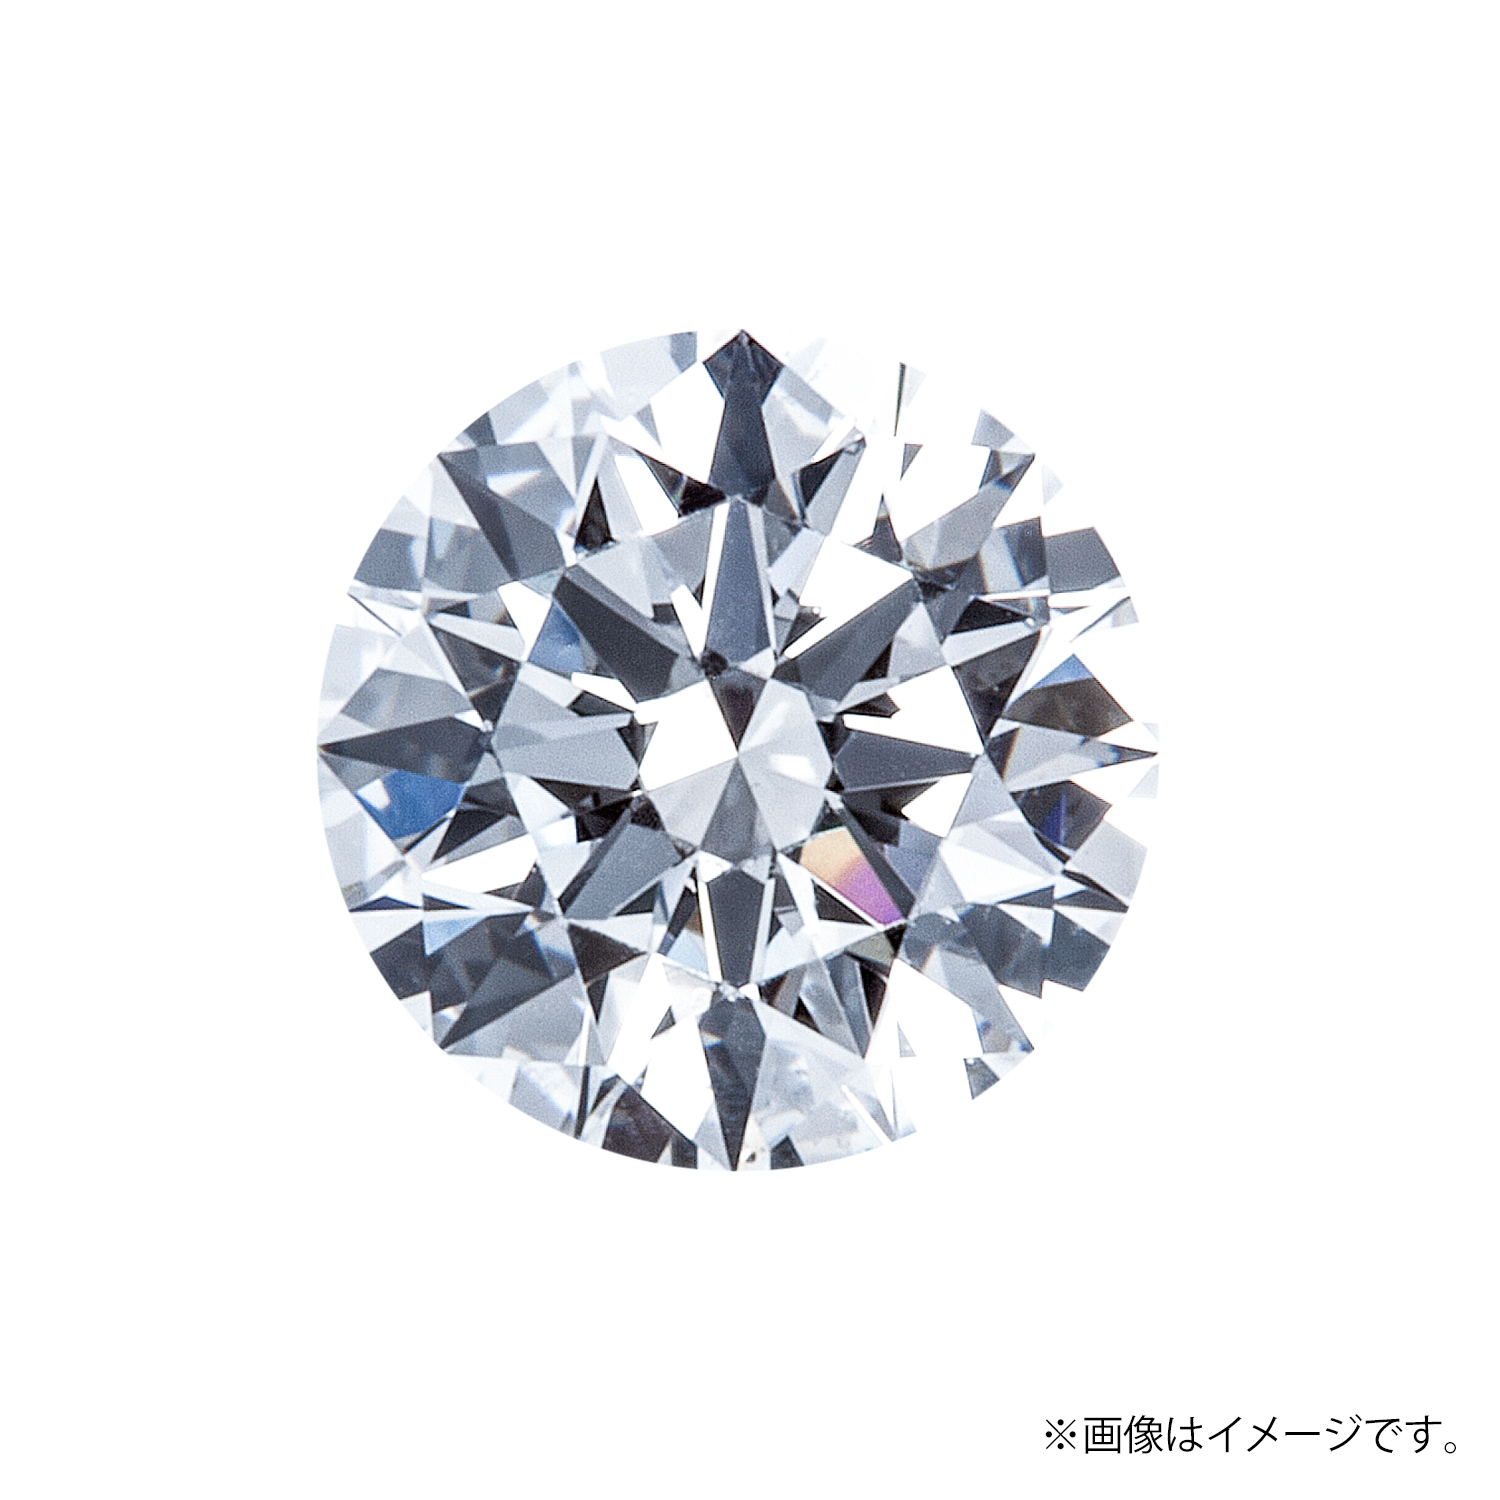 0.162ct Round ダイヤモンド / G / VS1 / 3EX H&C